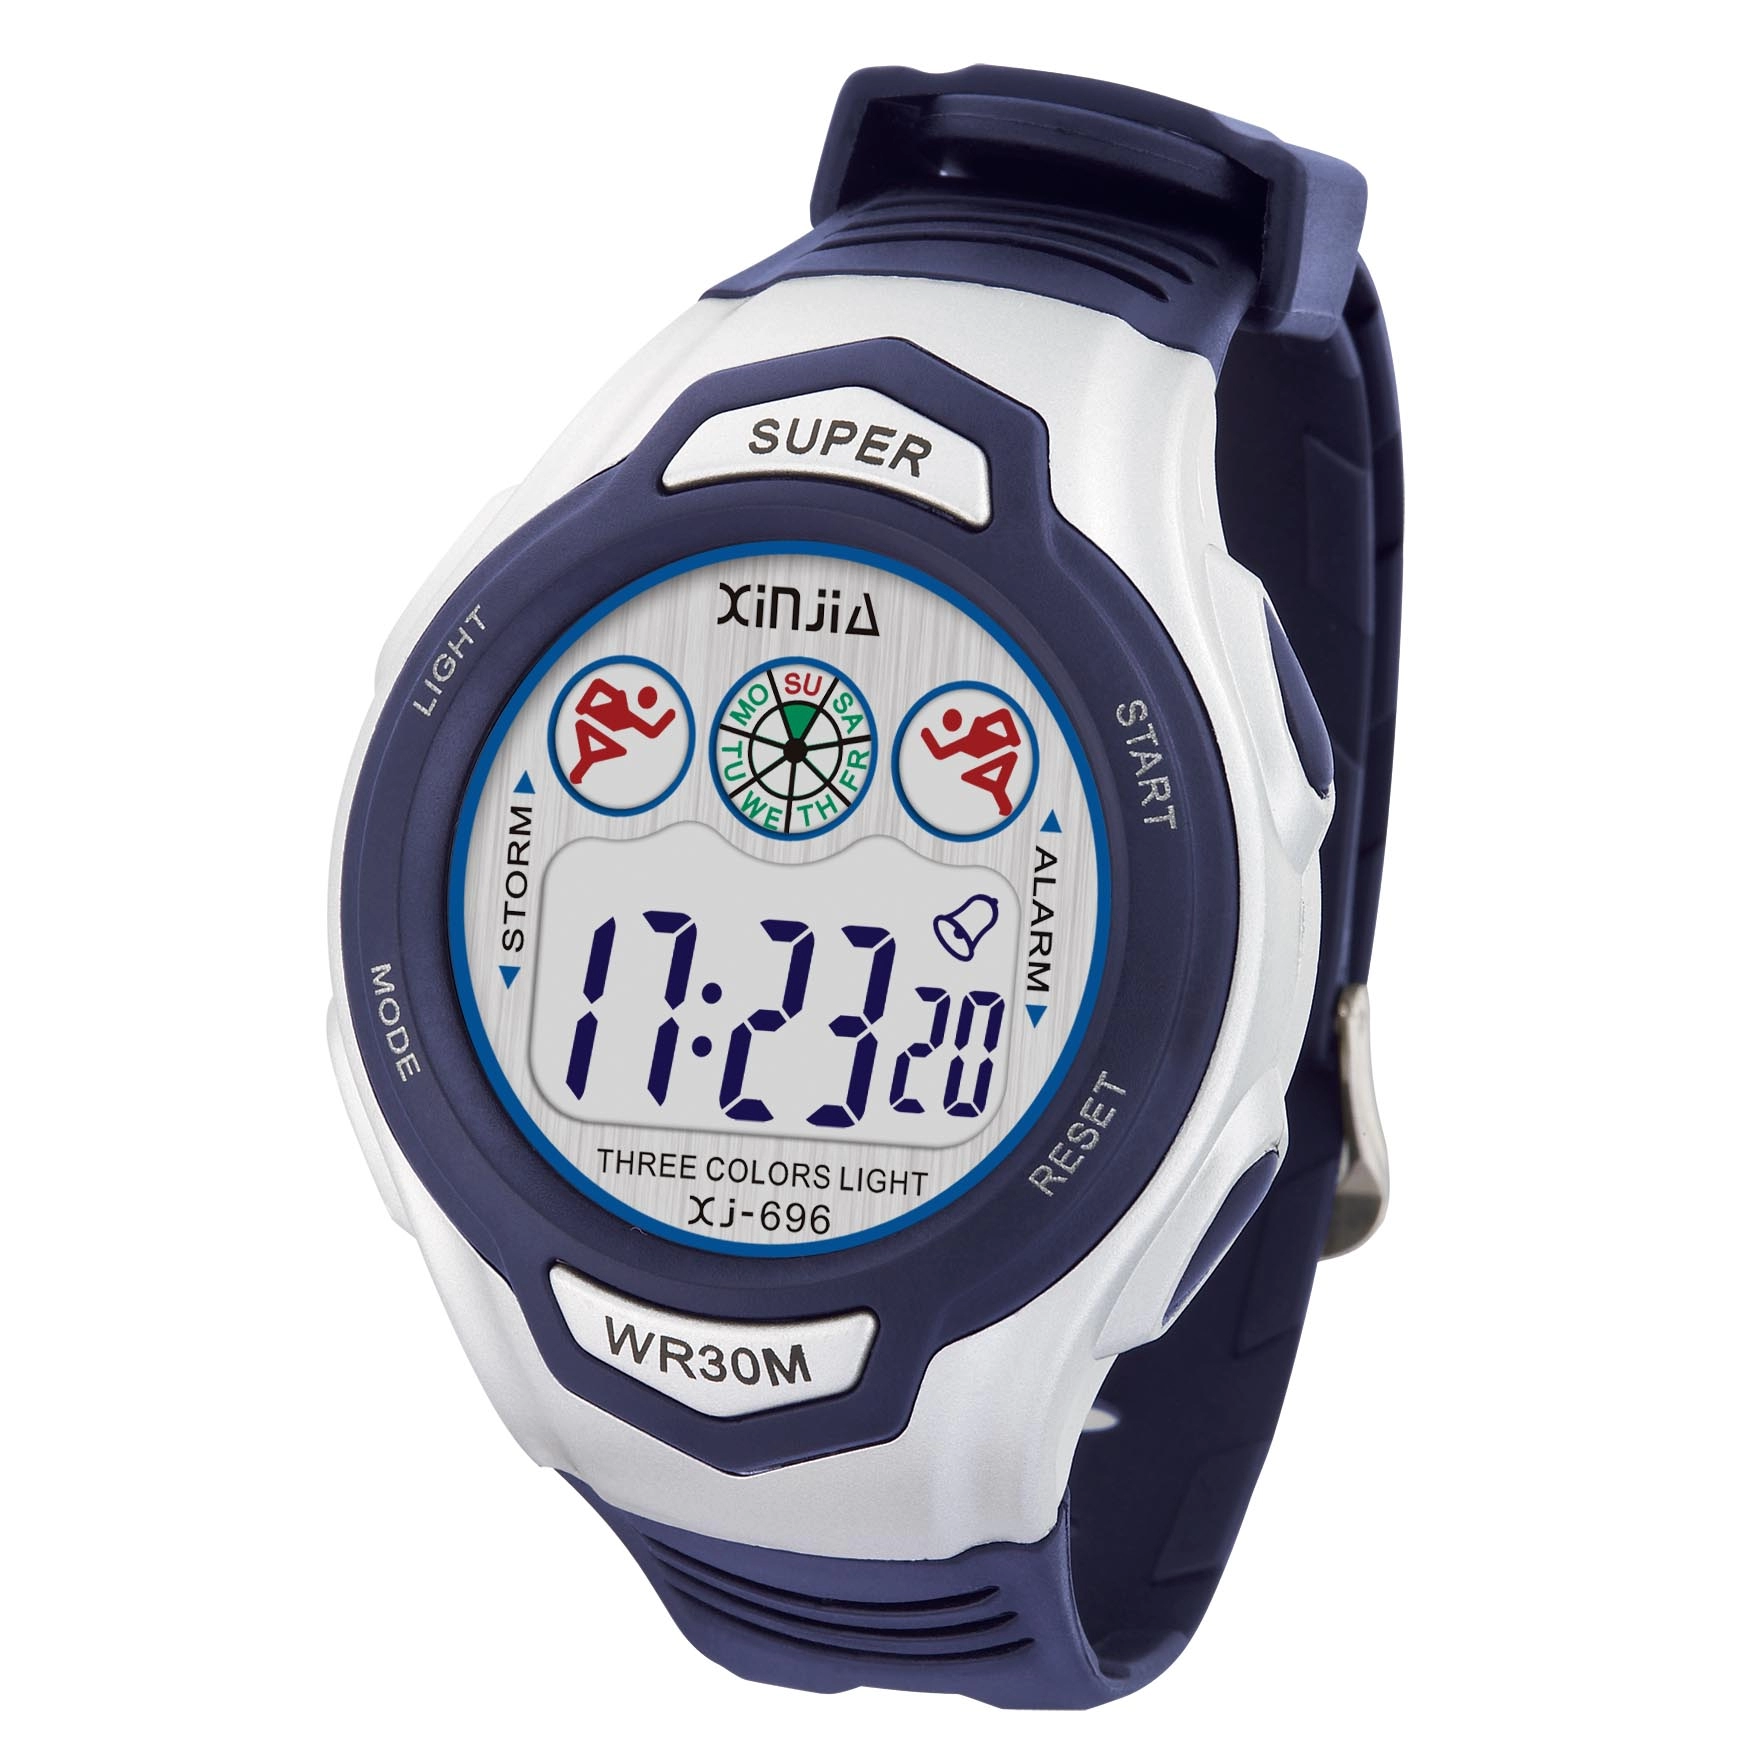 Super Series Three-Color Light Digital Water Resistant Wrist Watch